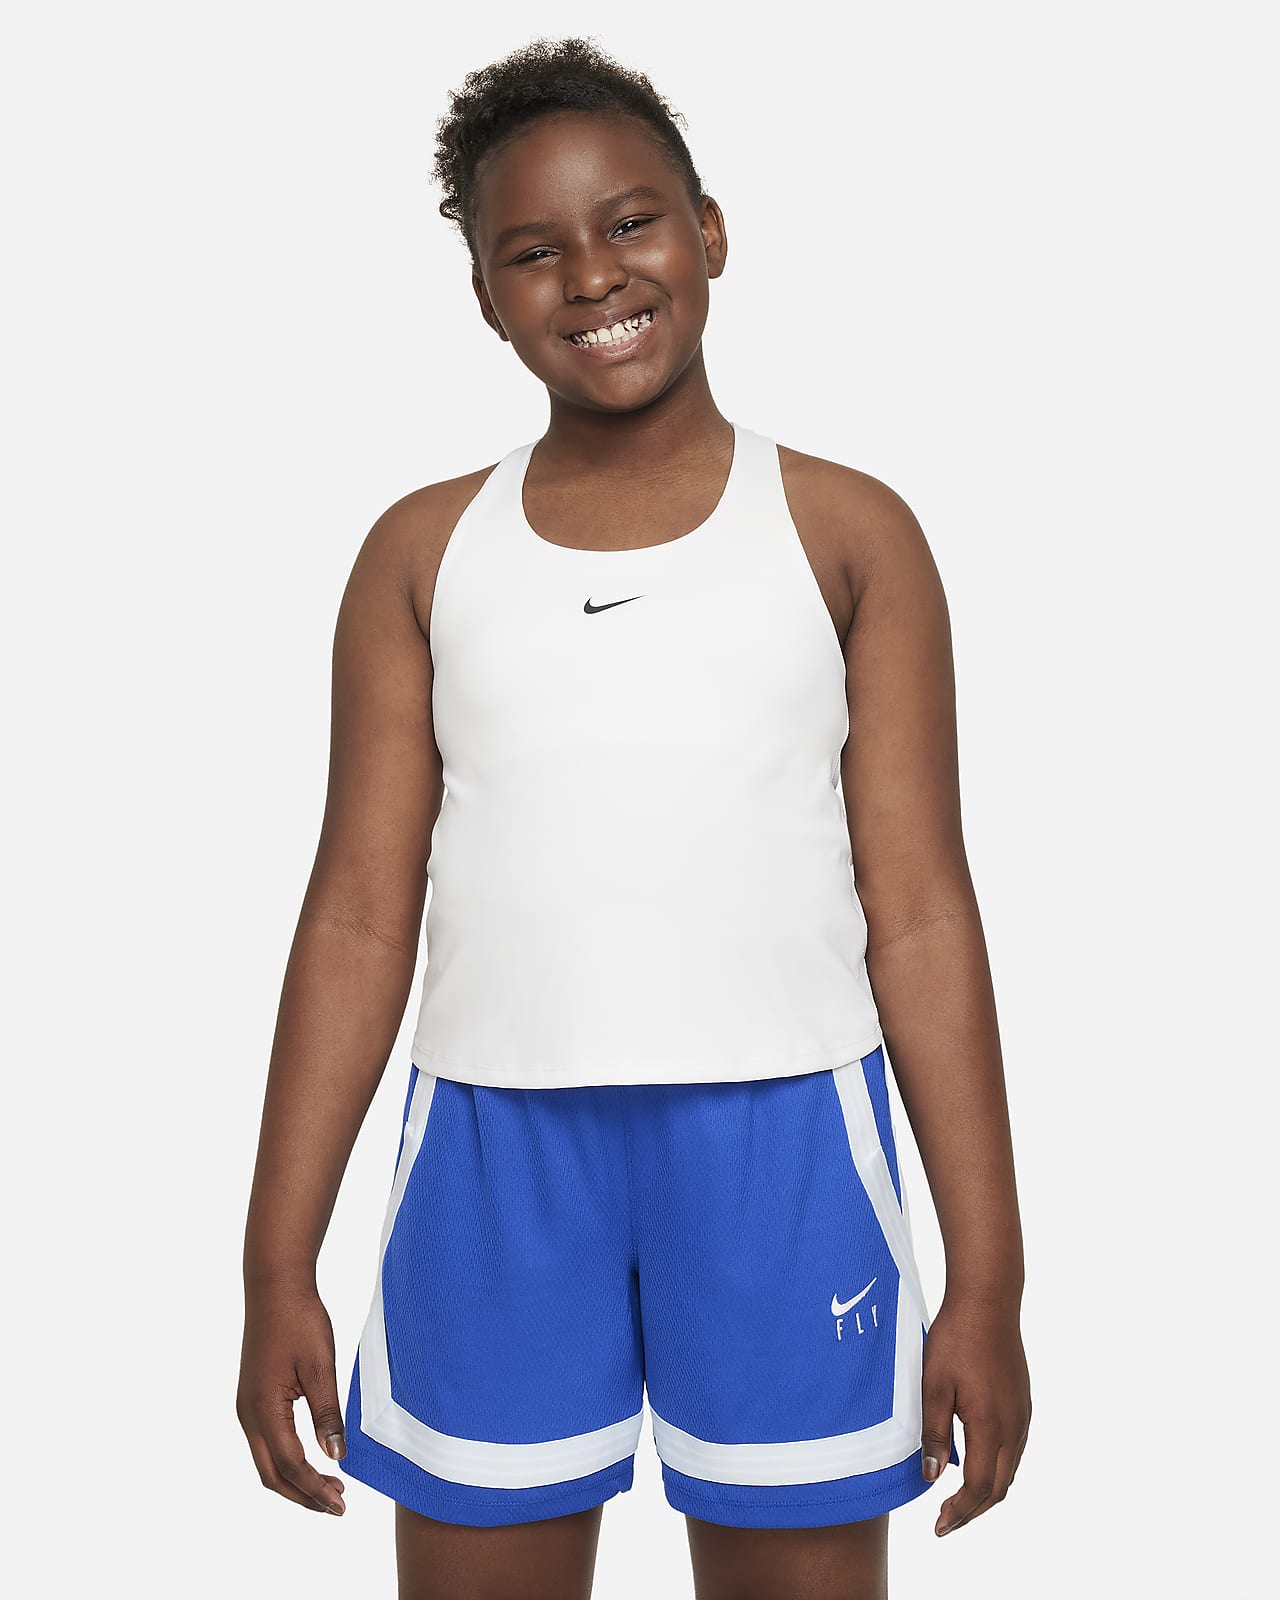 Big Kids (XS - XL) White Nike Swoosh Sports Bras.